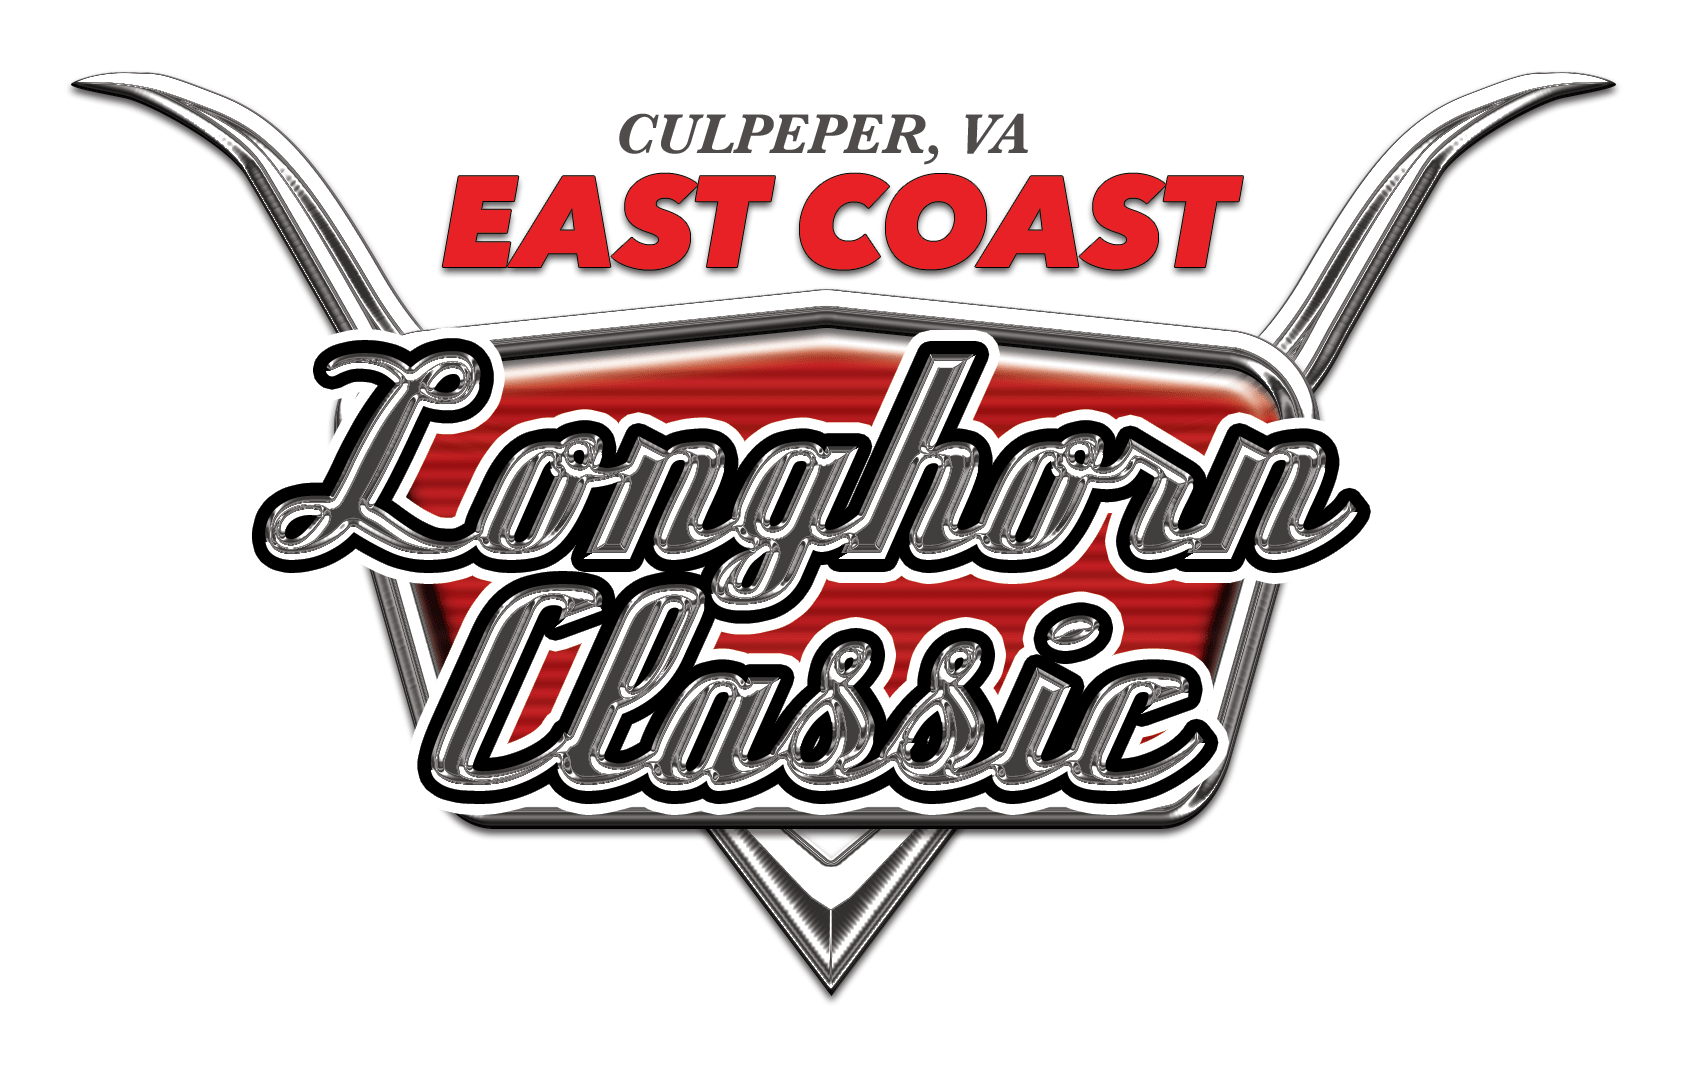 East Coast Longhorn Classic in Culpeper, Virginia